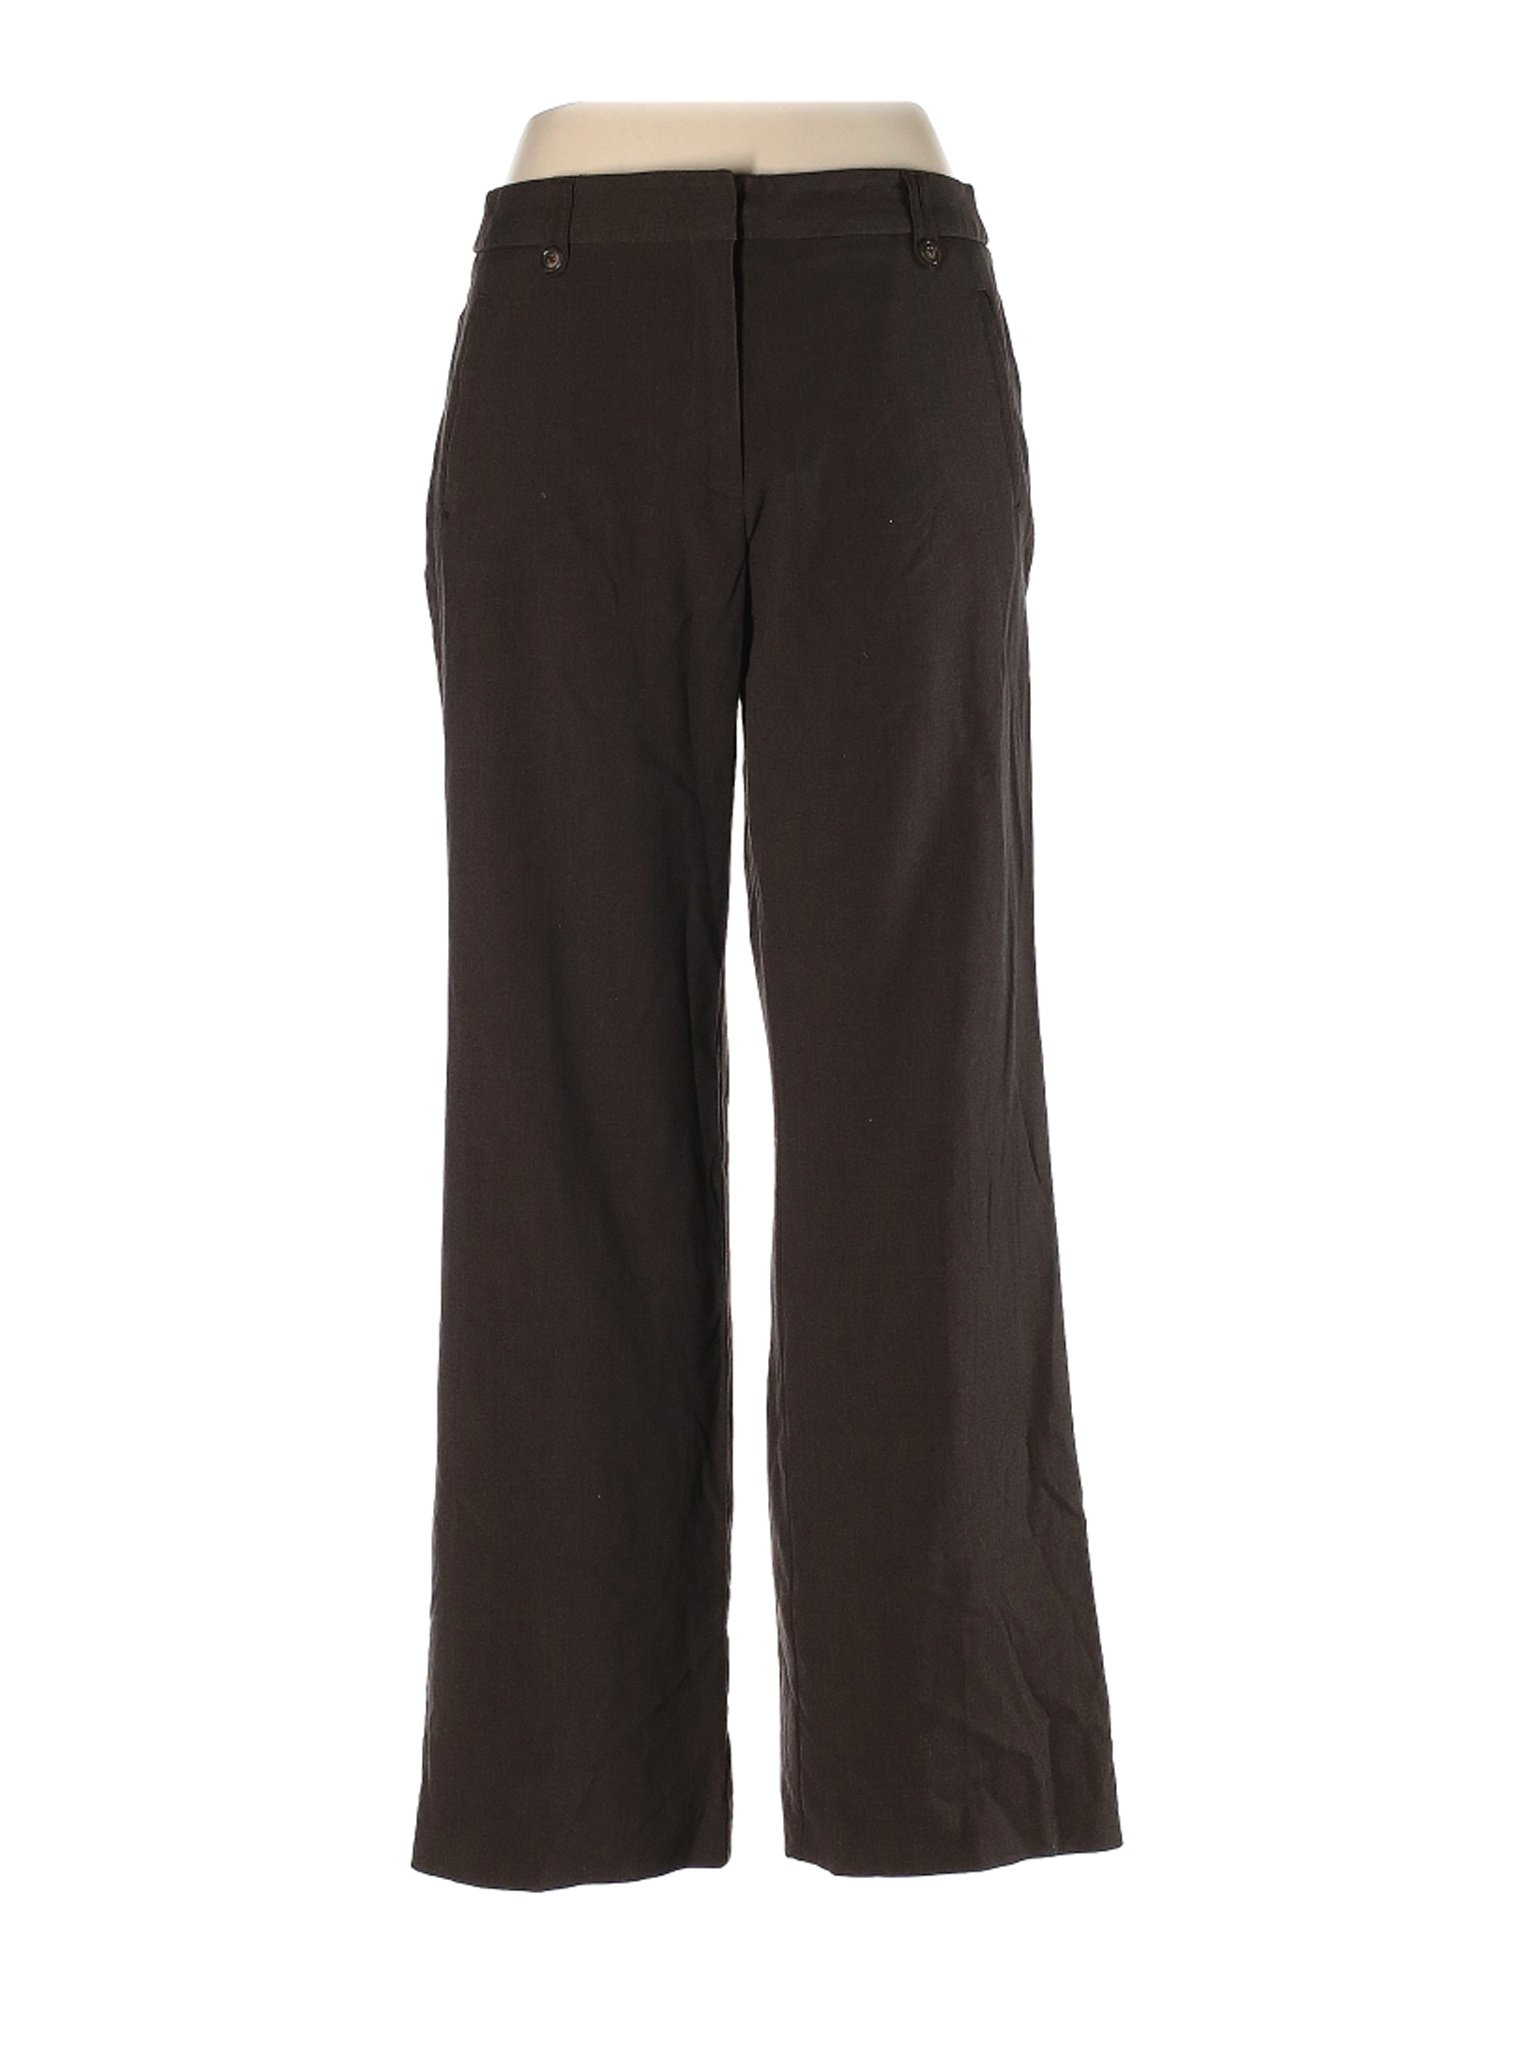 Counterparts Women Brown Dress Pants 12 | eBay